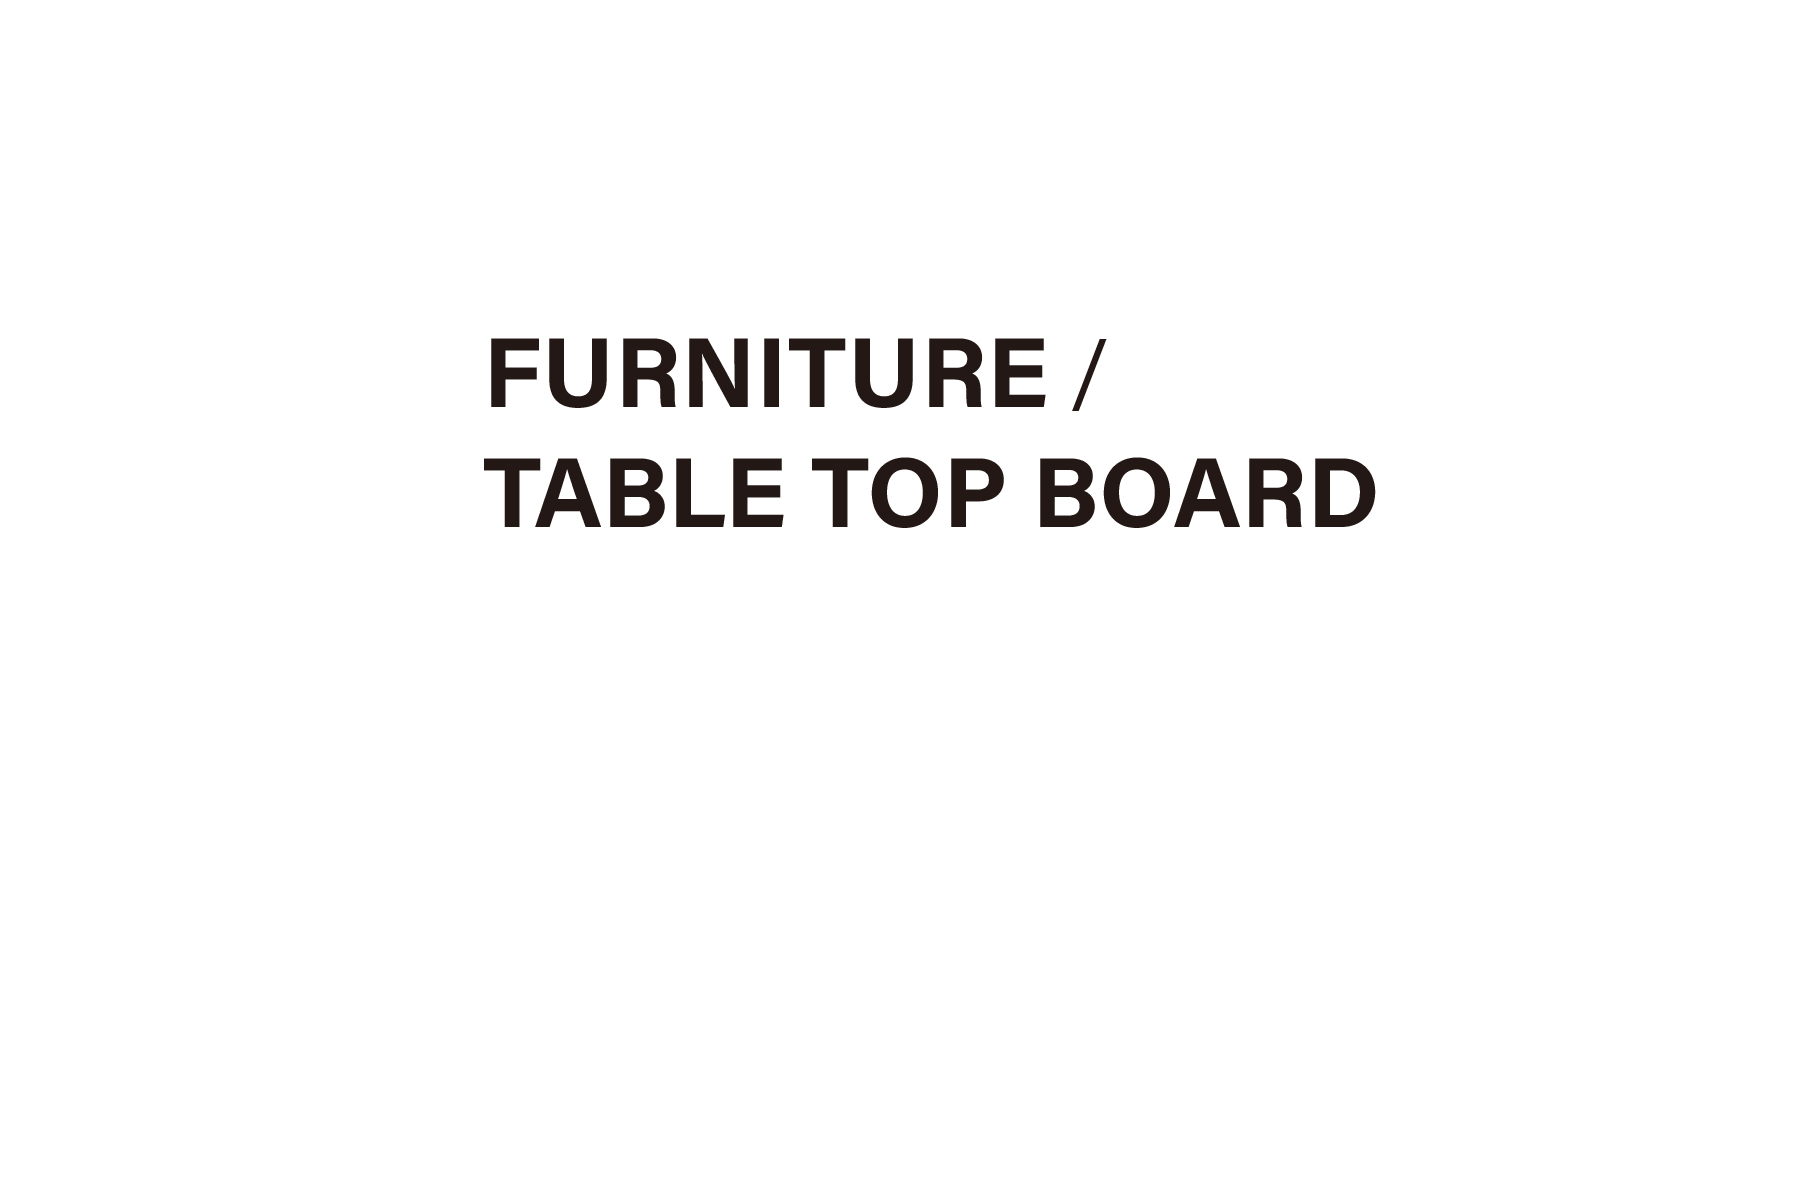 TABLE TOP BOARD